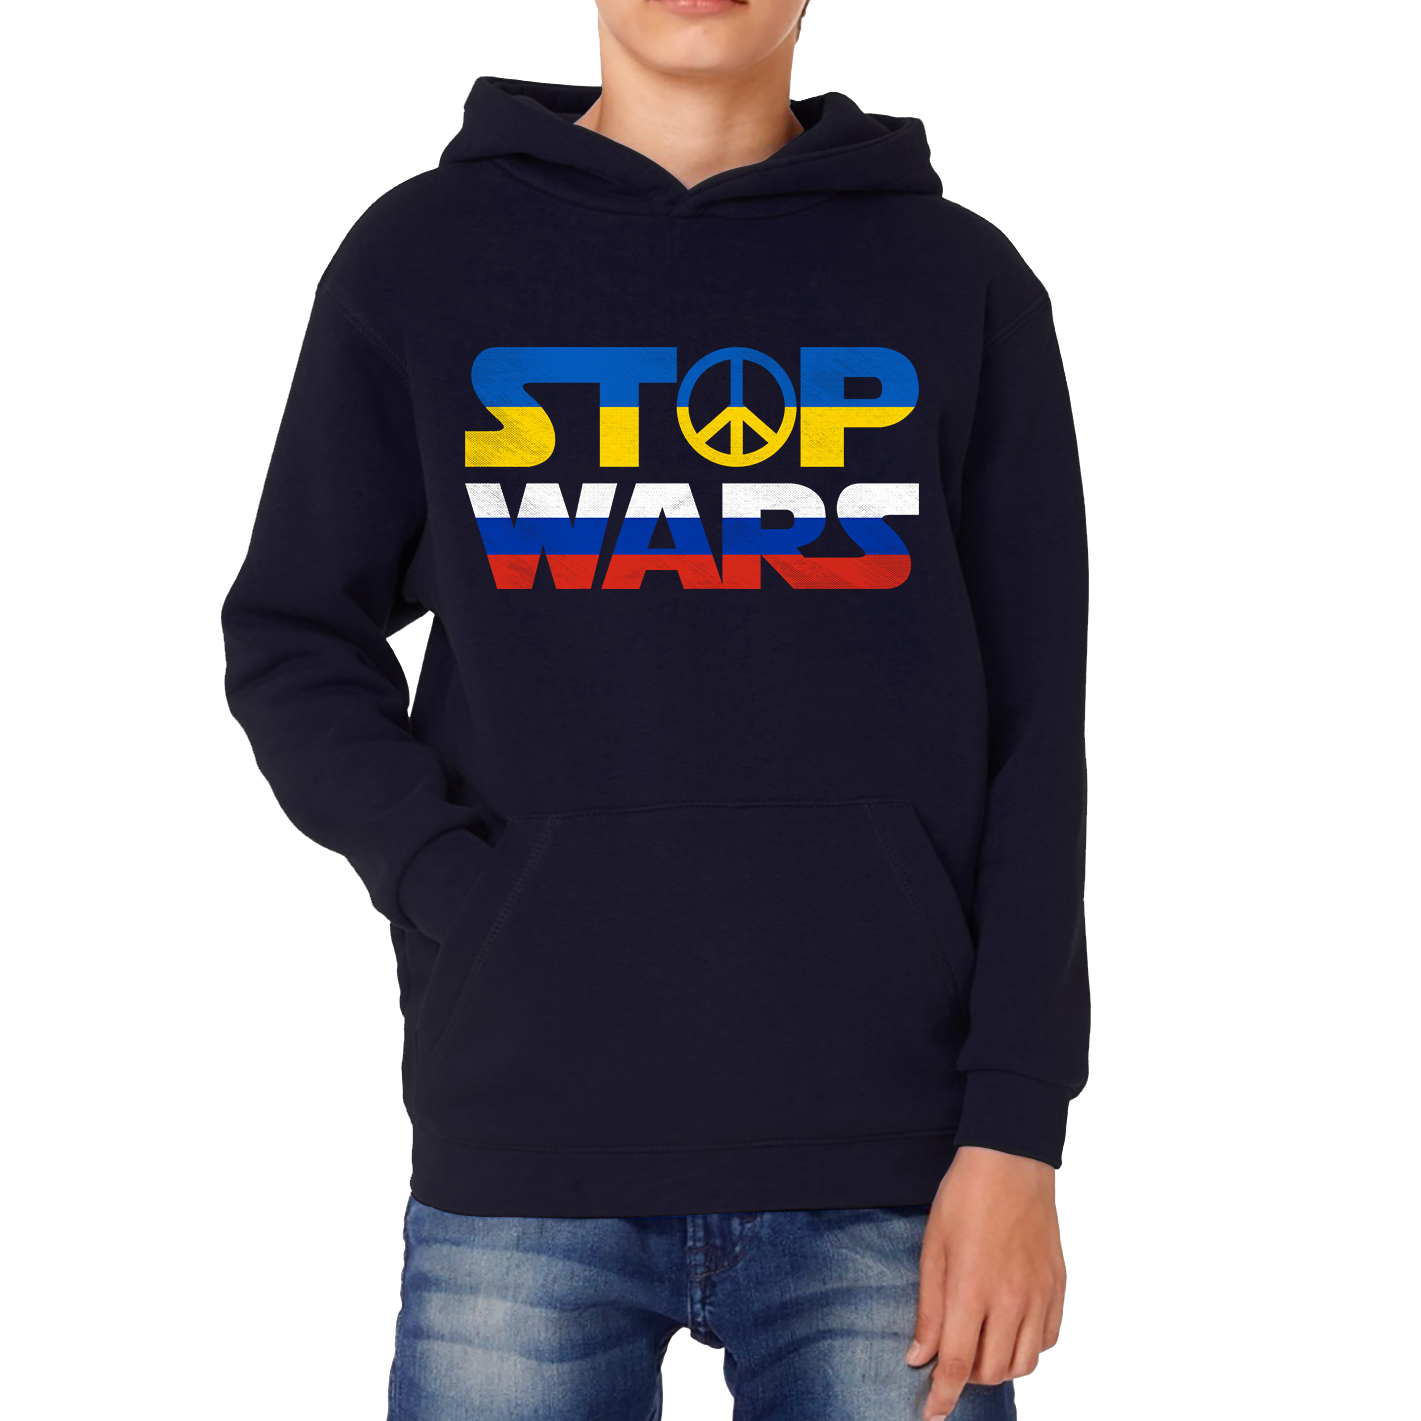 Stop Wars Russia And Ukraine Star Wars Spoof Kids Hoodie